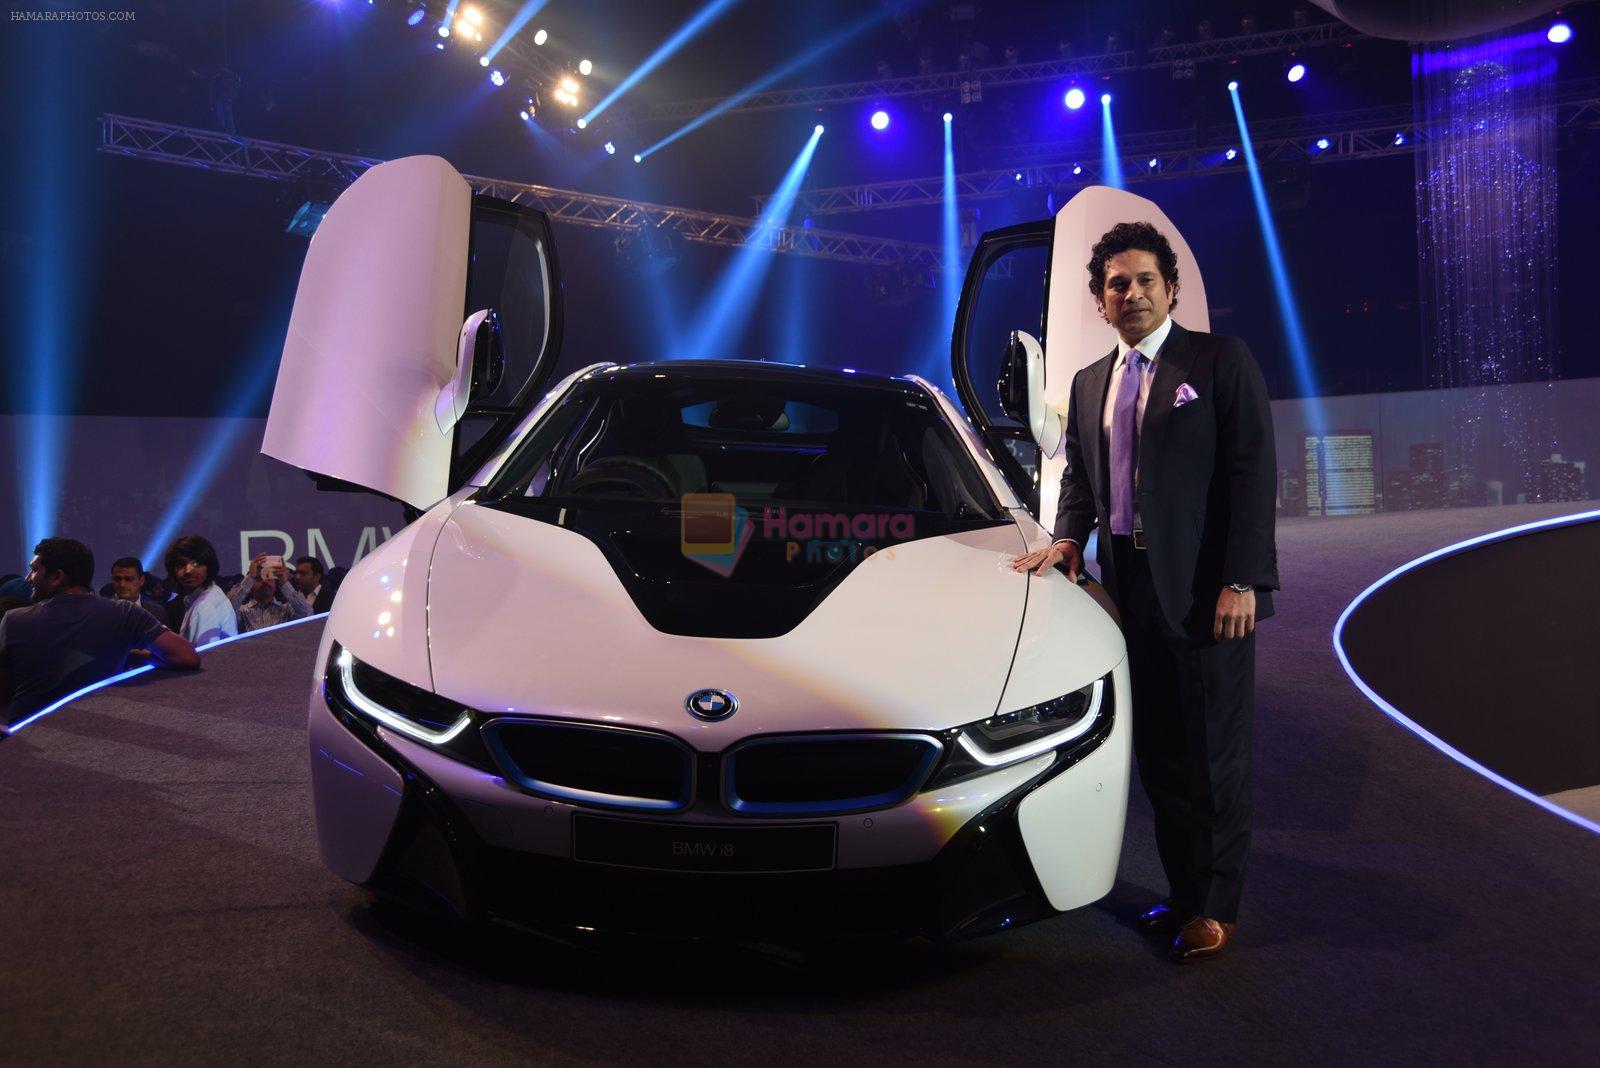 Sachin Tendulkar at BMW i8 launch in Mumbai on 18th Feb 2015